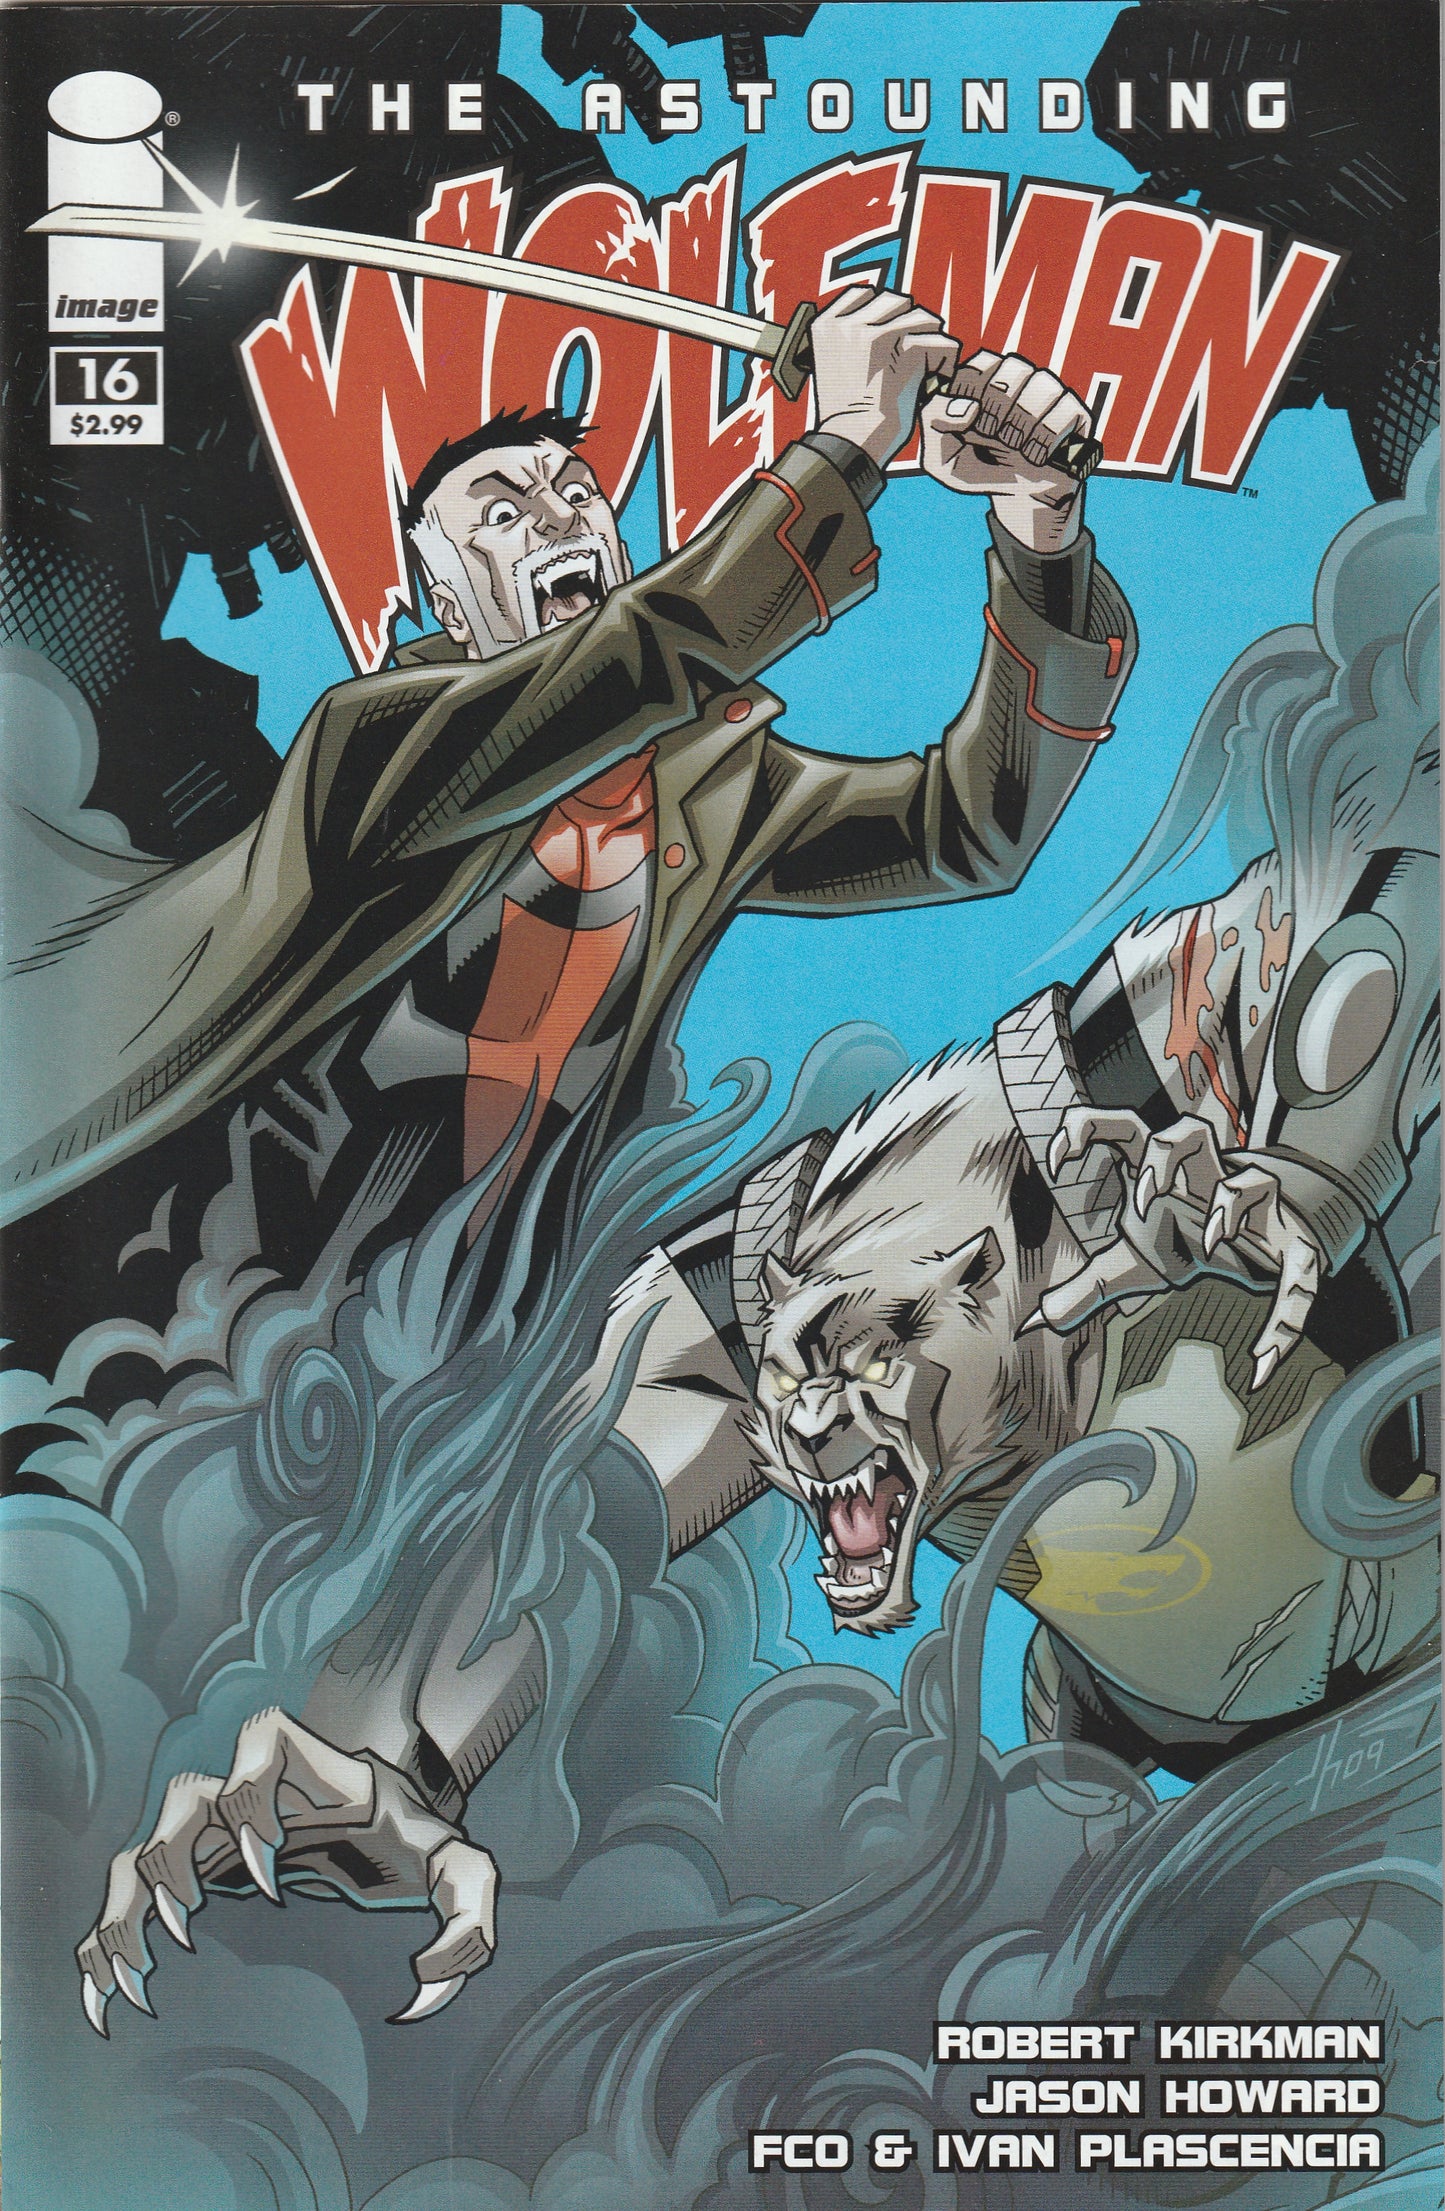 The Astounding Wolf-Man #16 (2009) - Robert Kirkman